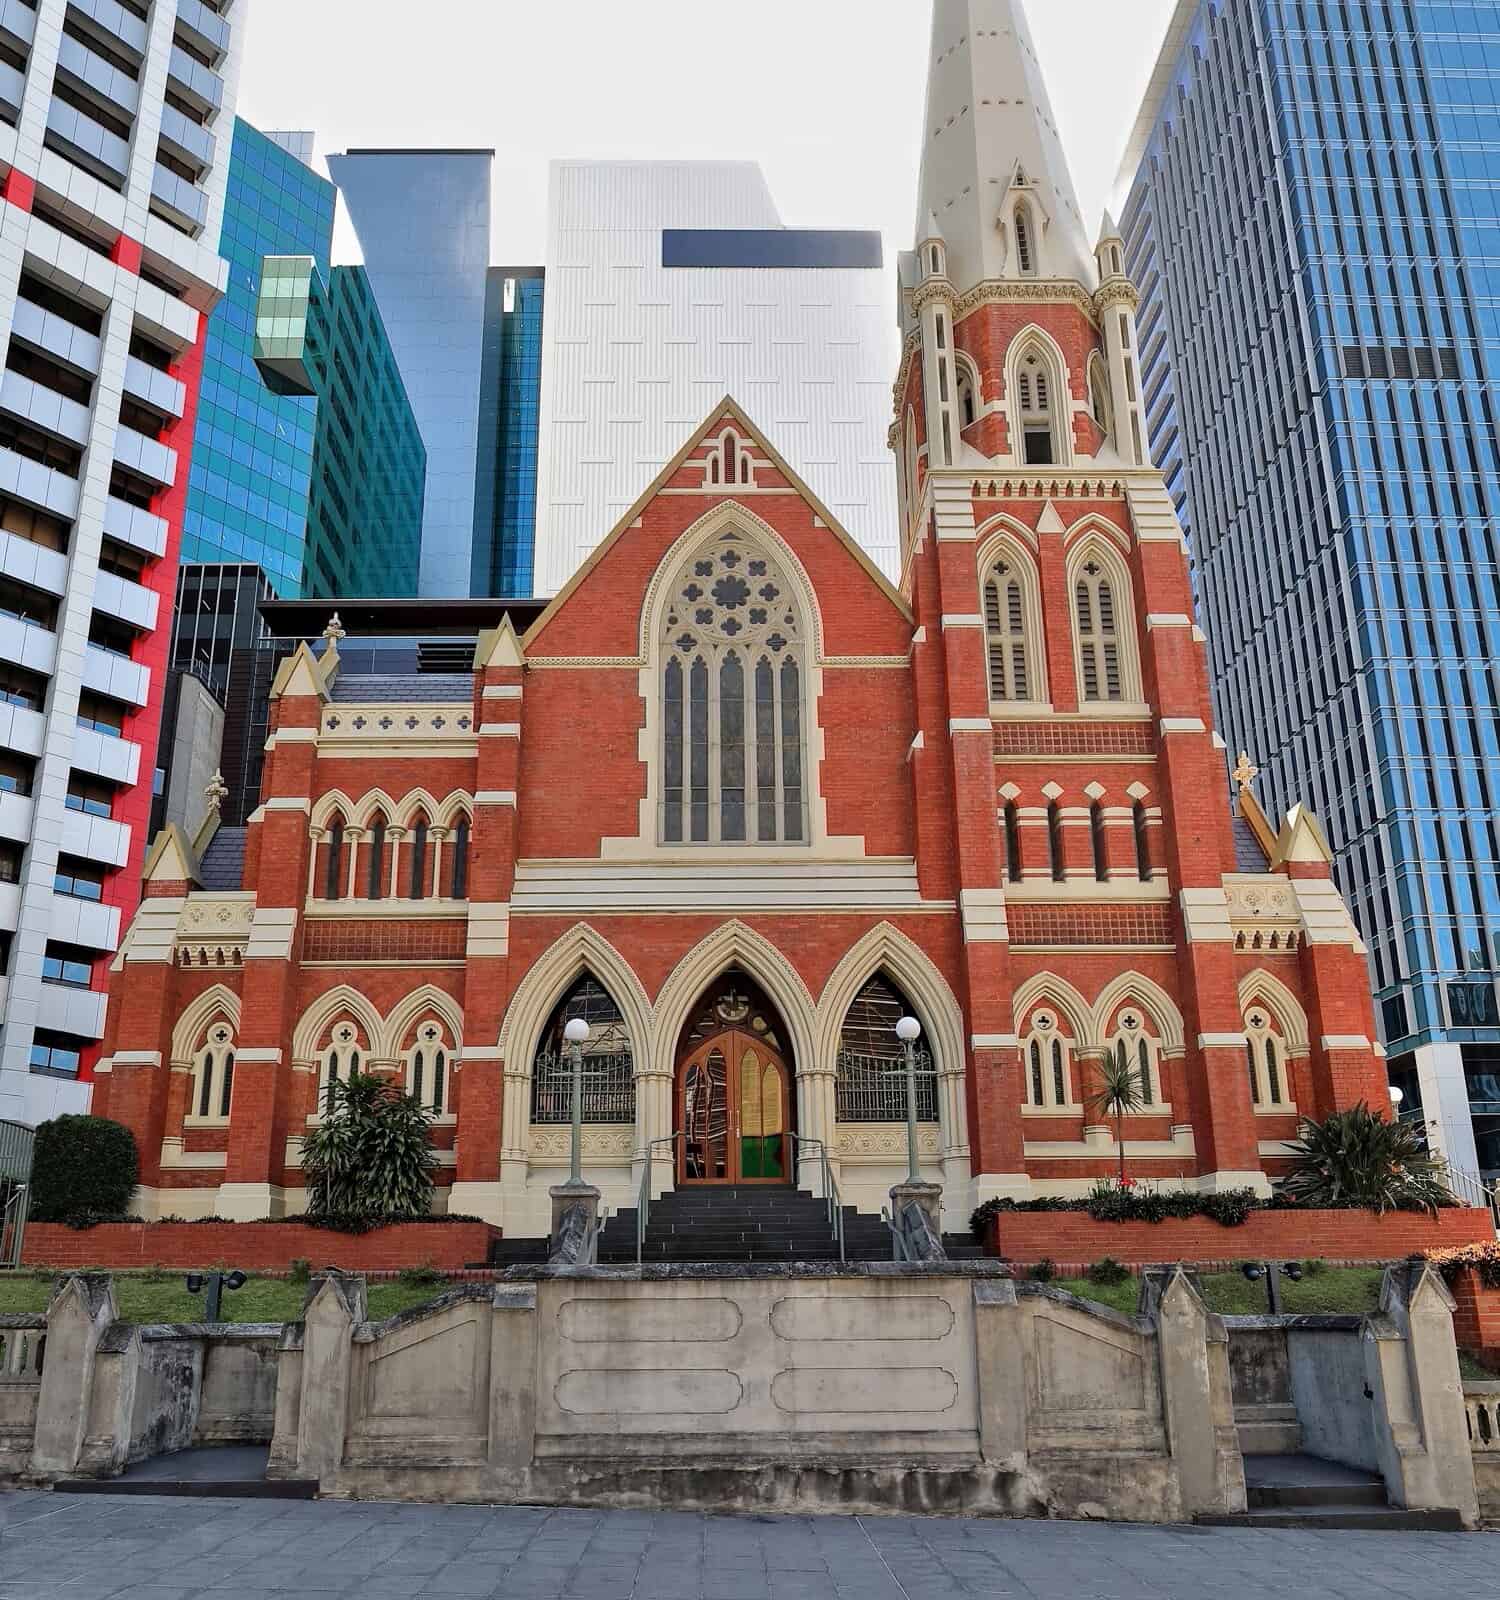 Victorian Gothic Revival architecture: Albert Street Uniting Church 